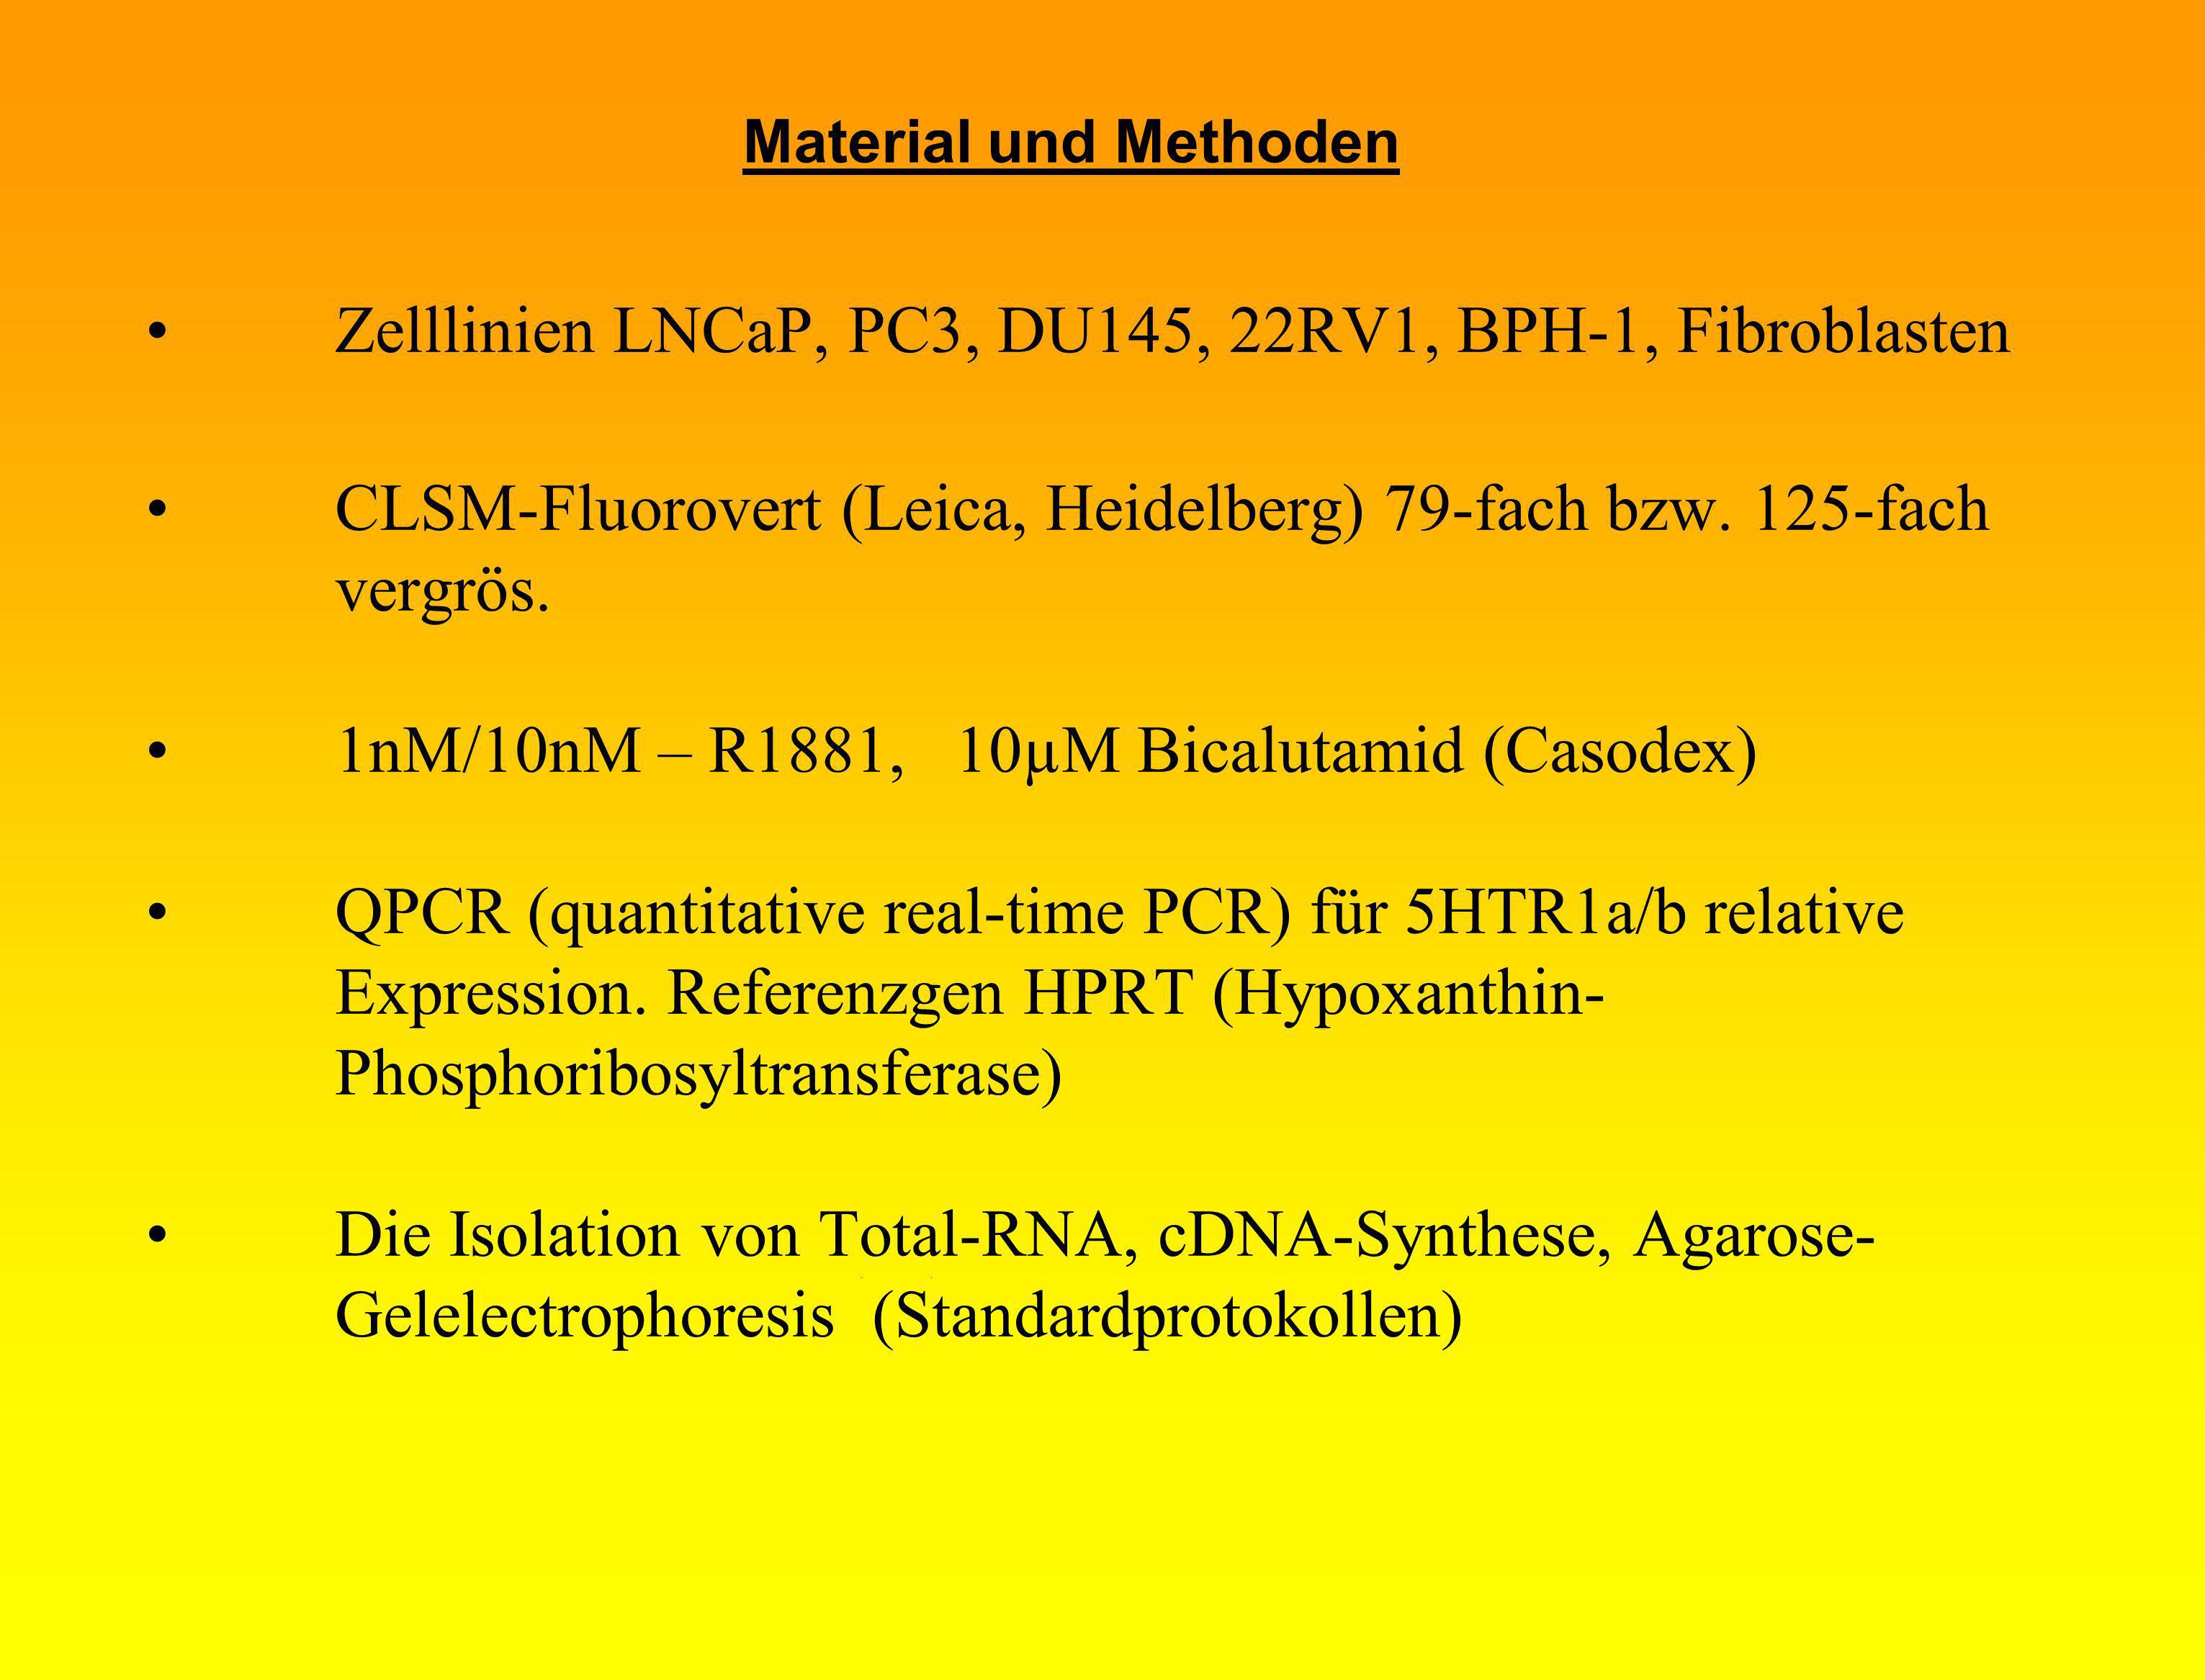 Zelllinien LNCaP, PC3, DU145, 22RV1, BPH-1, Fibroblasten